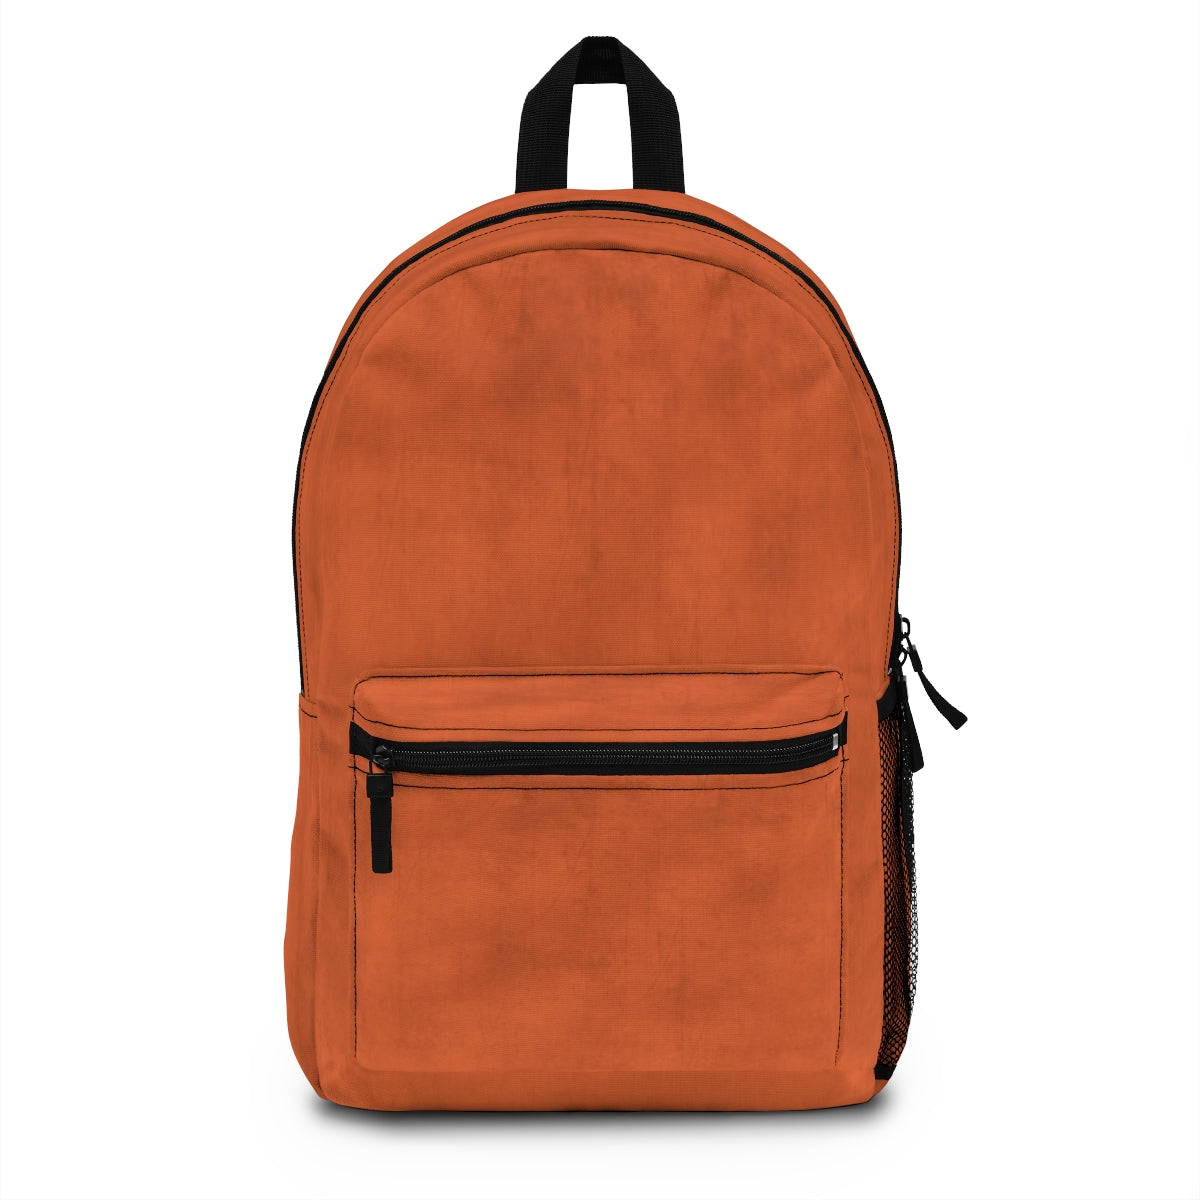 Autumn Orange Backpack